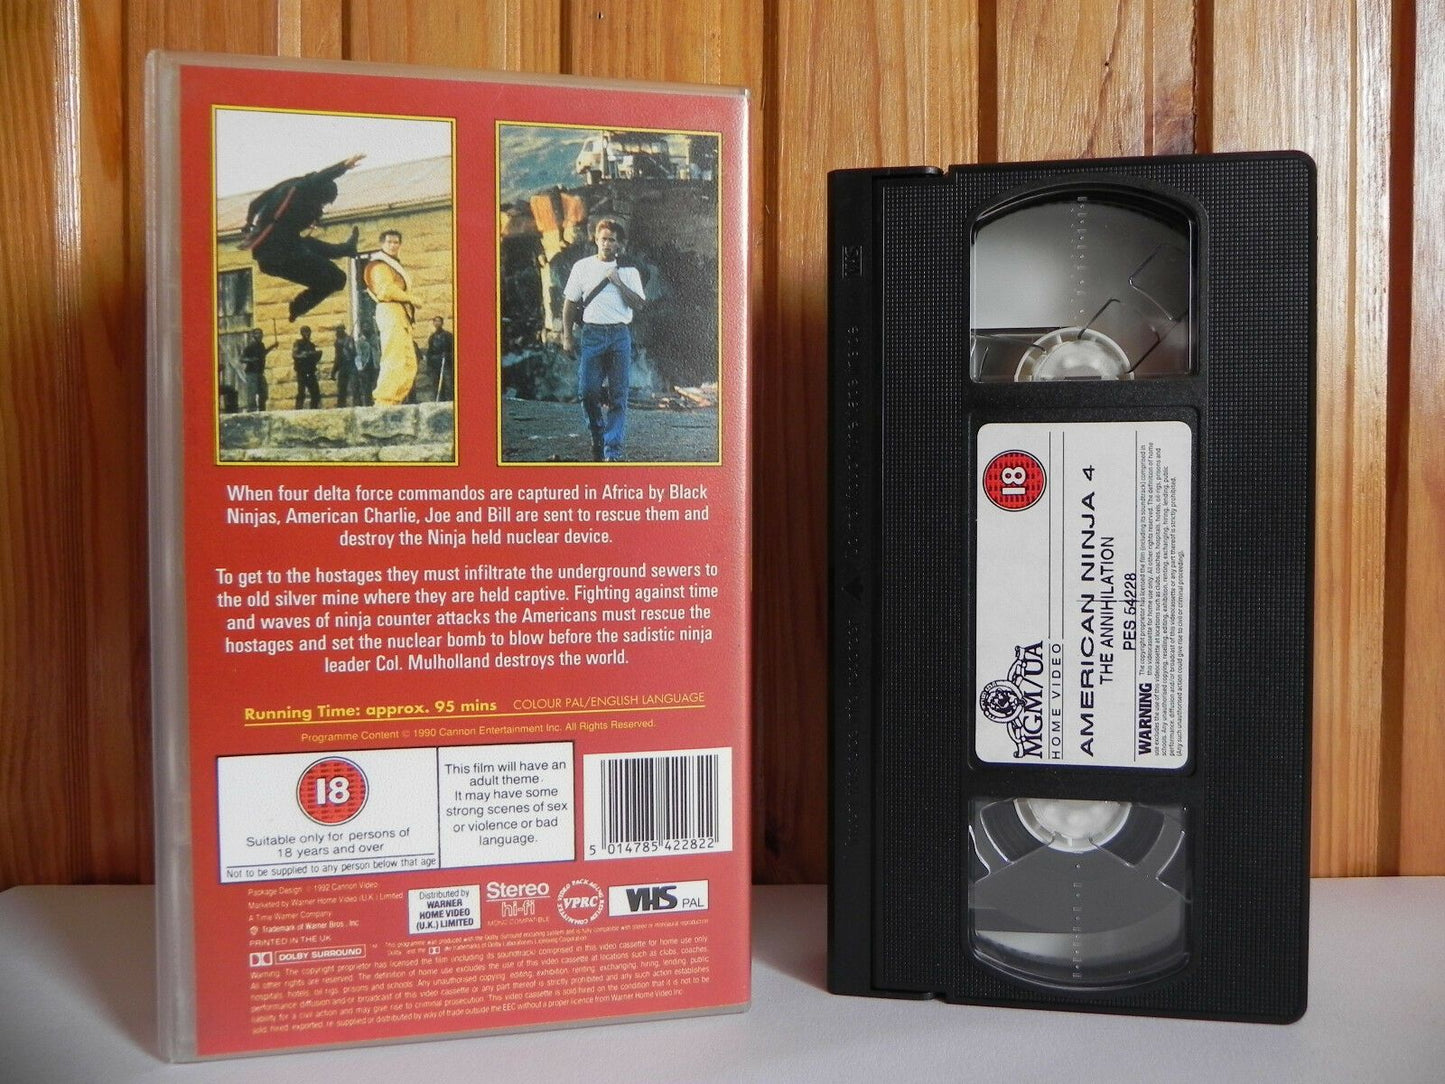 American Ninja 4: The Annihilation - Cannon - Cert (18) - Martial Arts - Pal VHS-